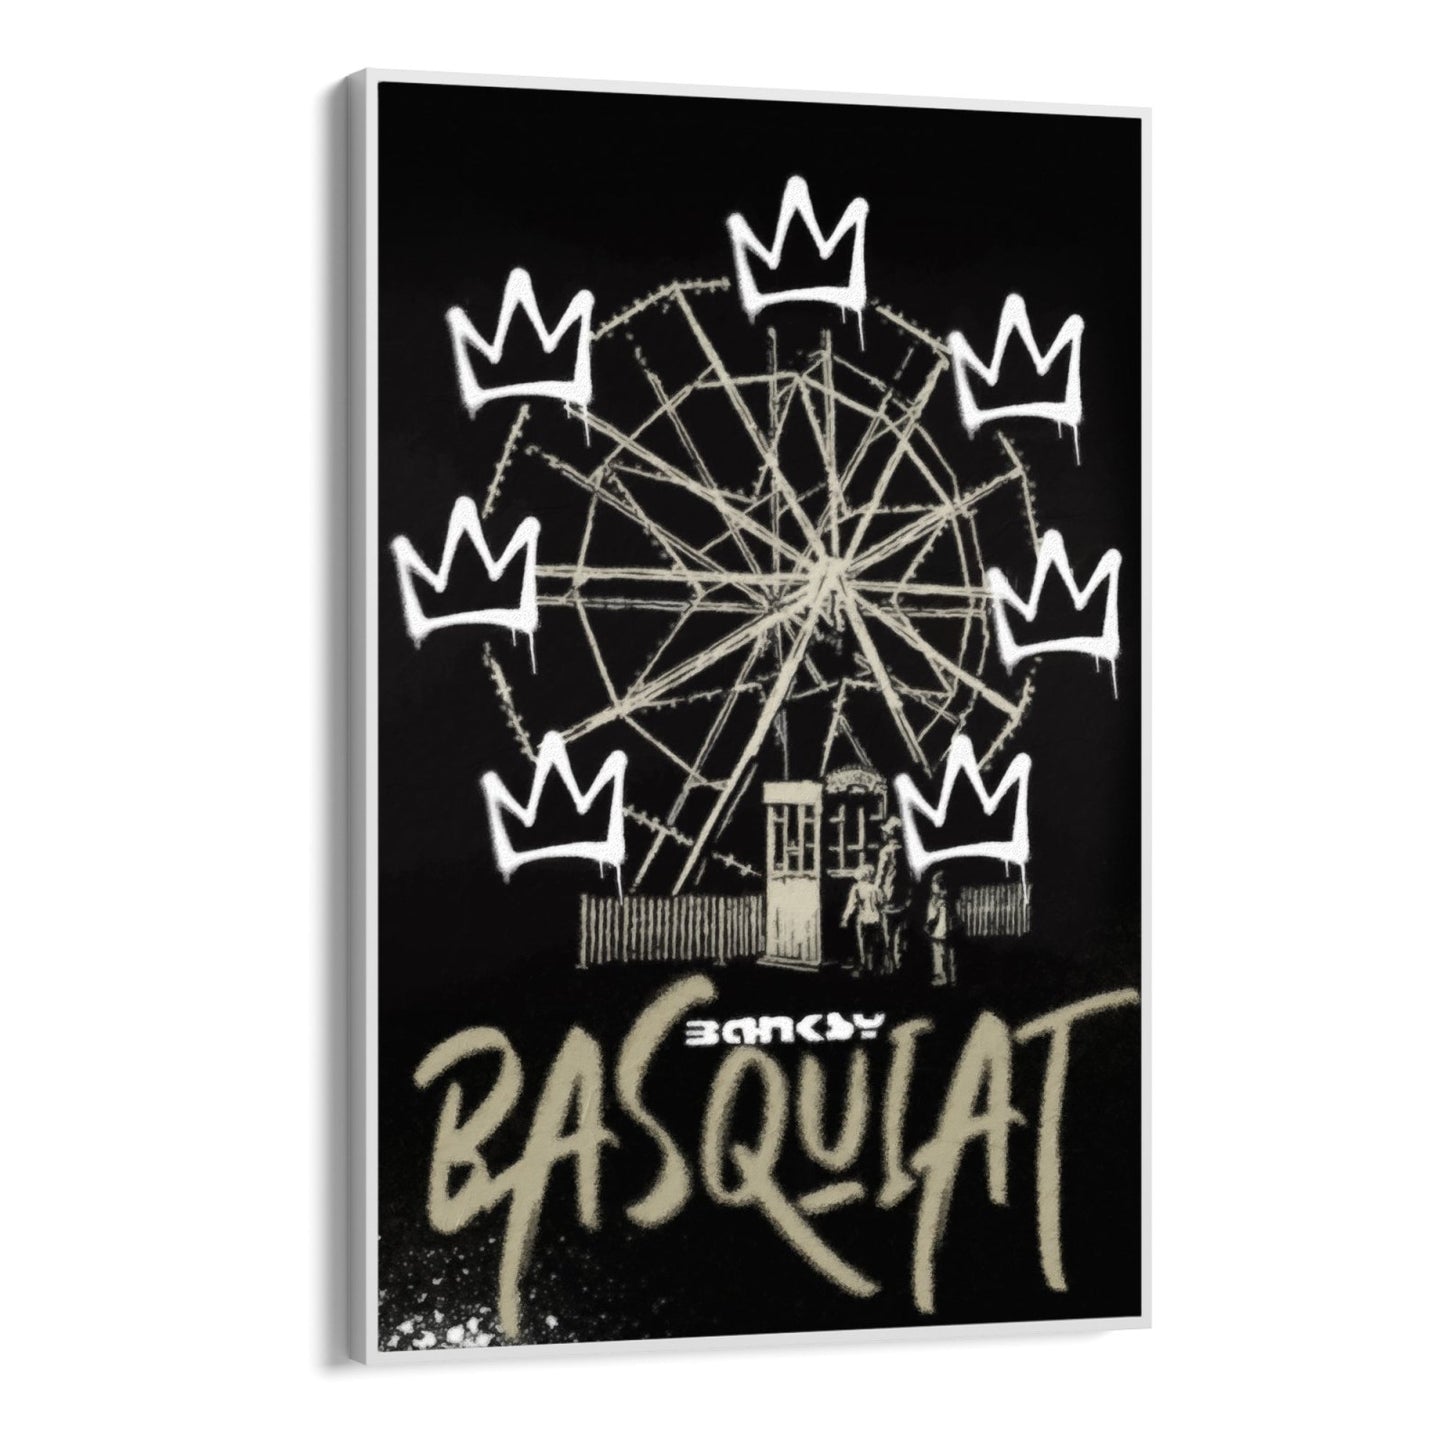 Banksy Basquiat-graffiti